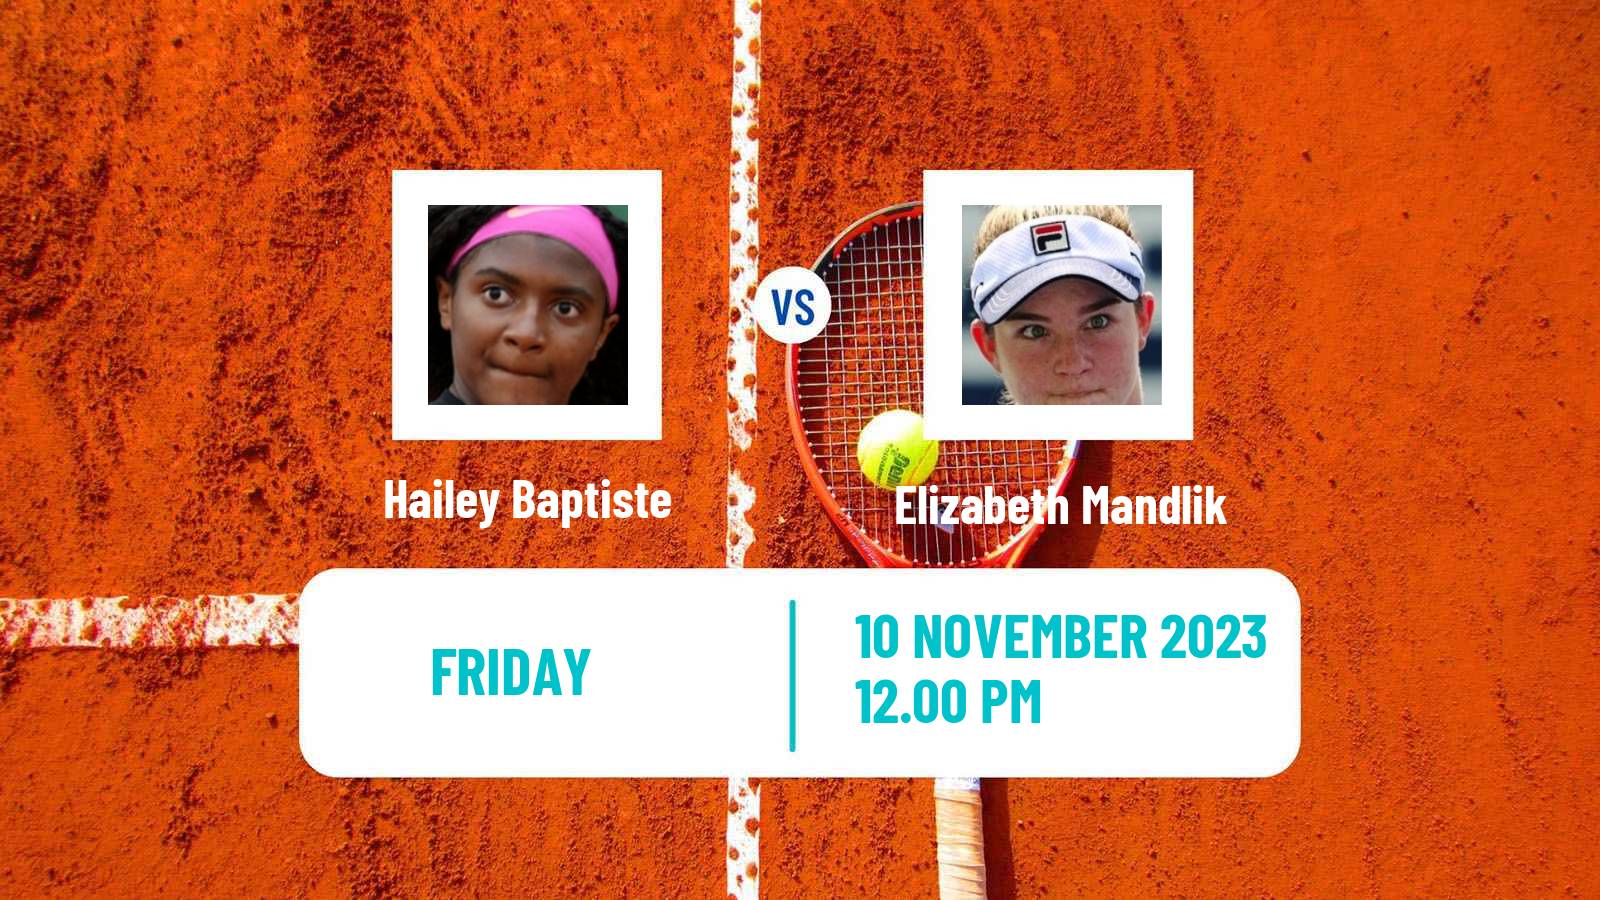 Tennis ITF W100 Charleston Sc 2 Women Hailey Baptiste - Elizabeth Mandlik